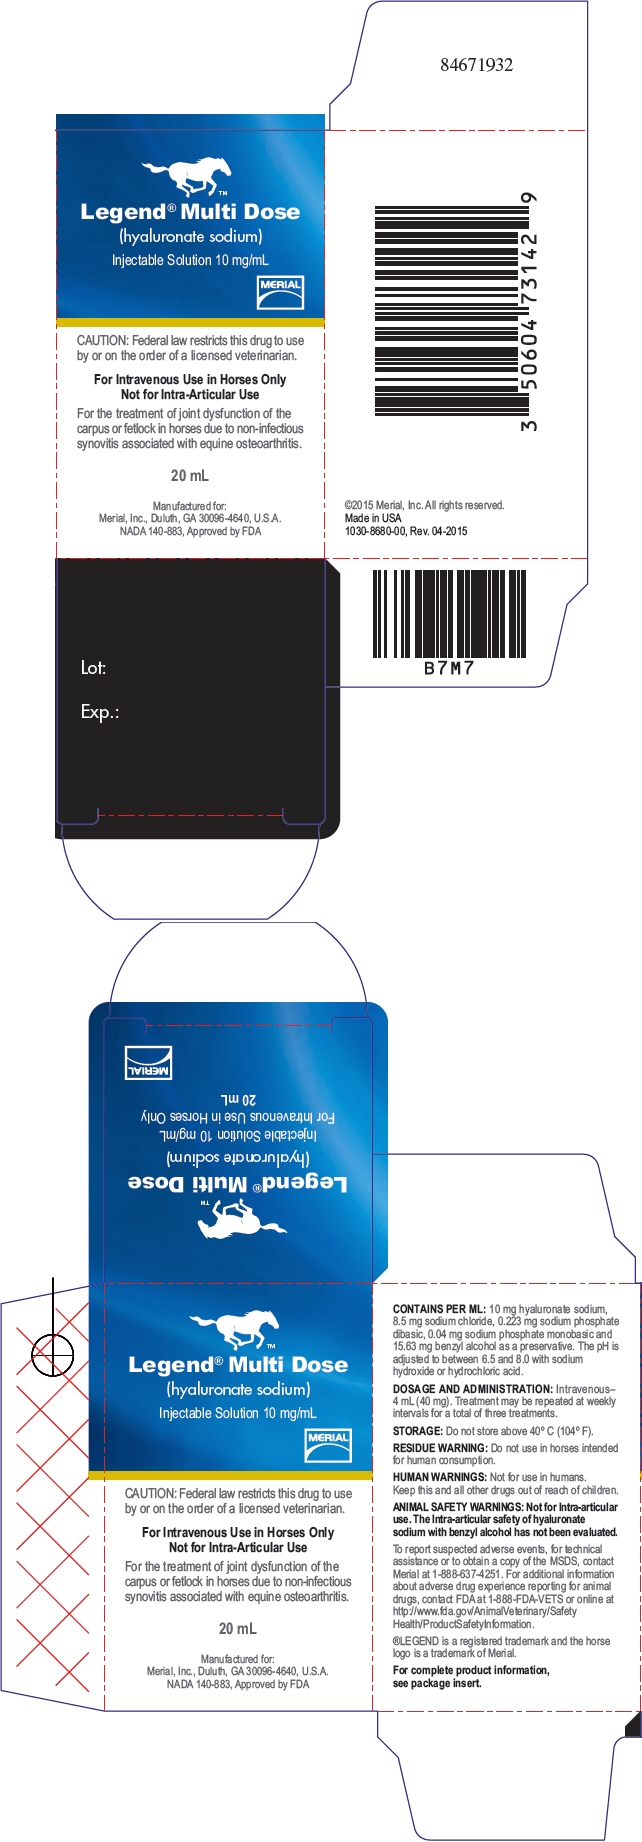 PRINCIPAL DISPLAY PANEL - 20 mL Bottle Carton